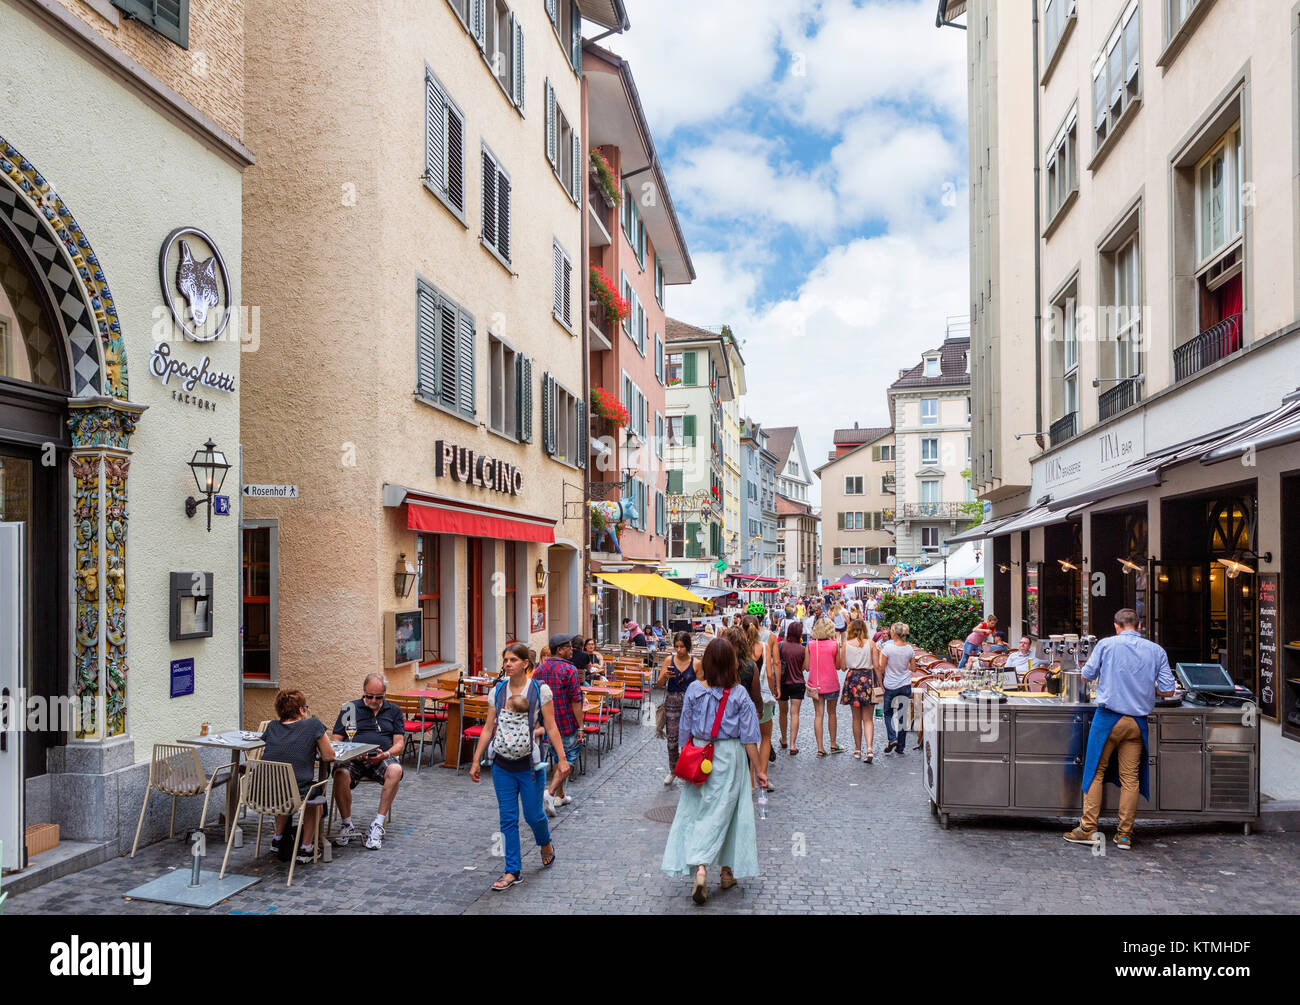 Negozi e caffetterie su Niederdorfstrasse nello storico quartiere Niederdorf, Zurigo, Svizzera Foto Stock